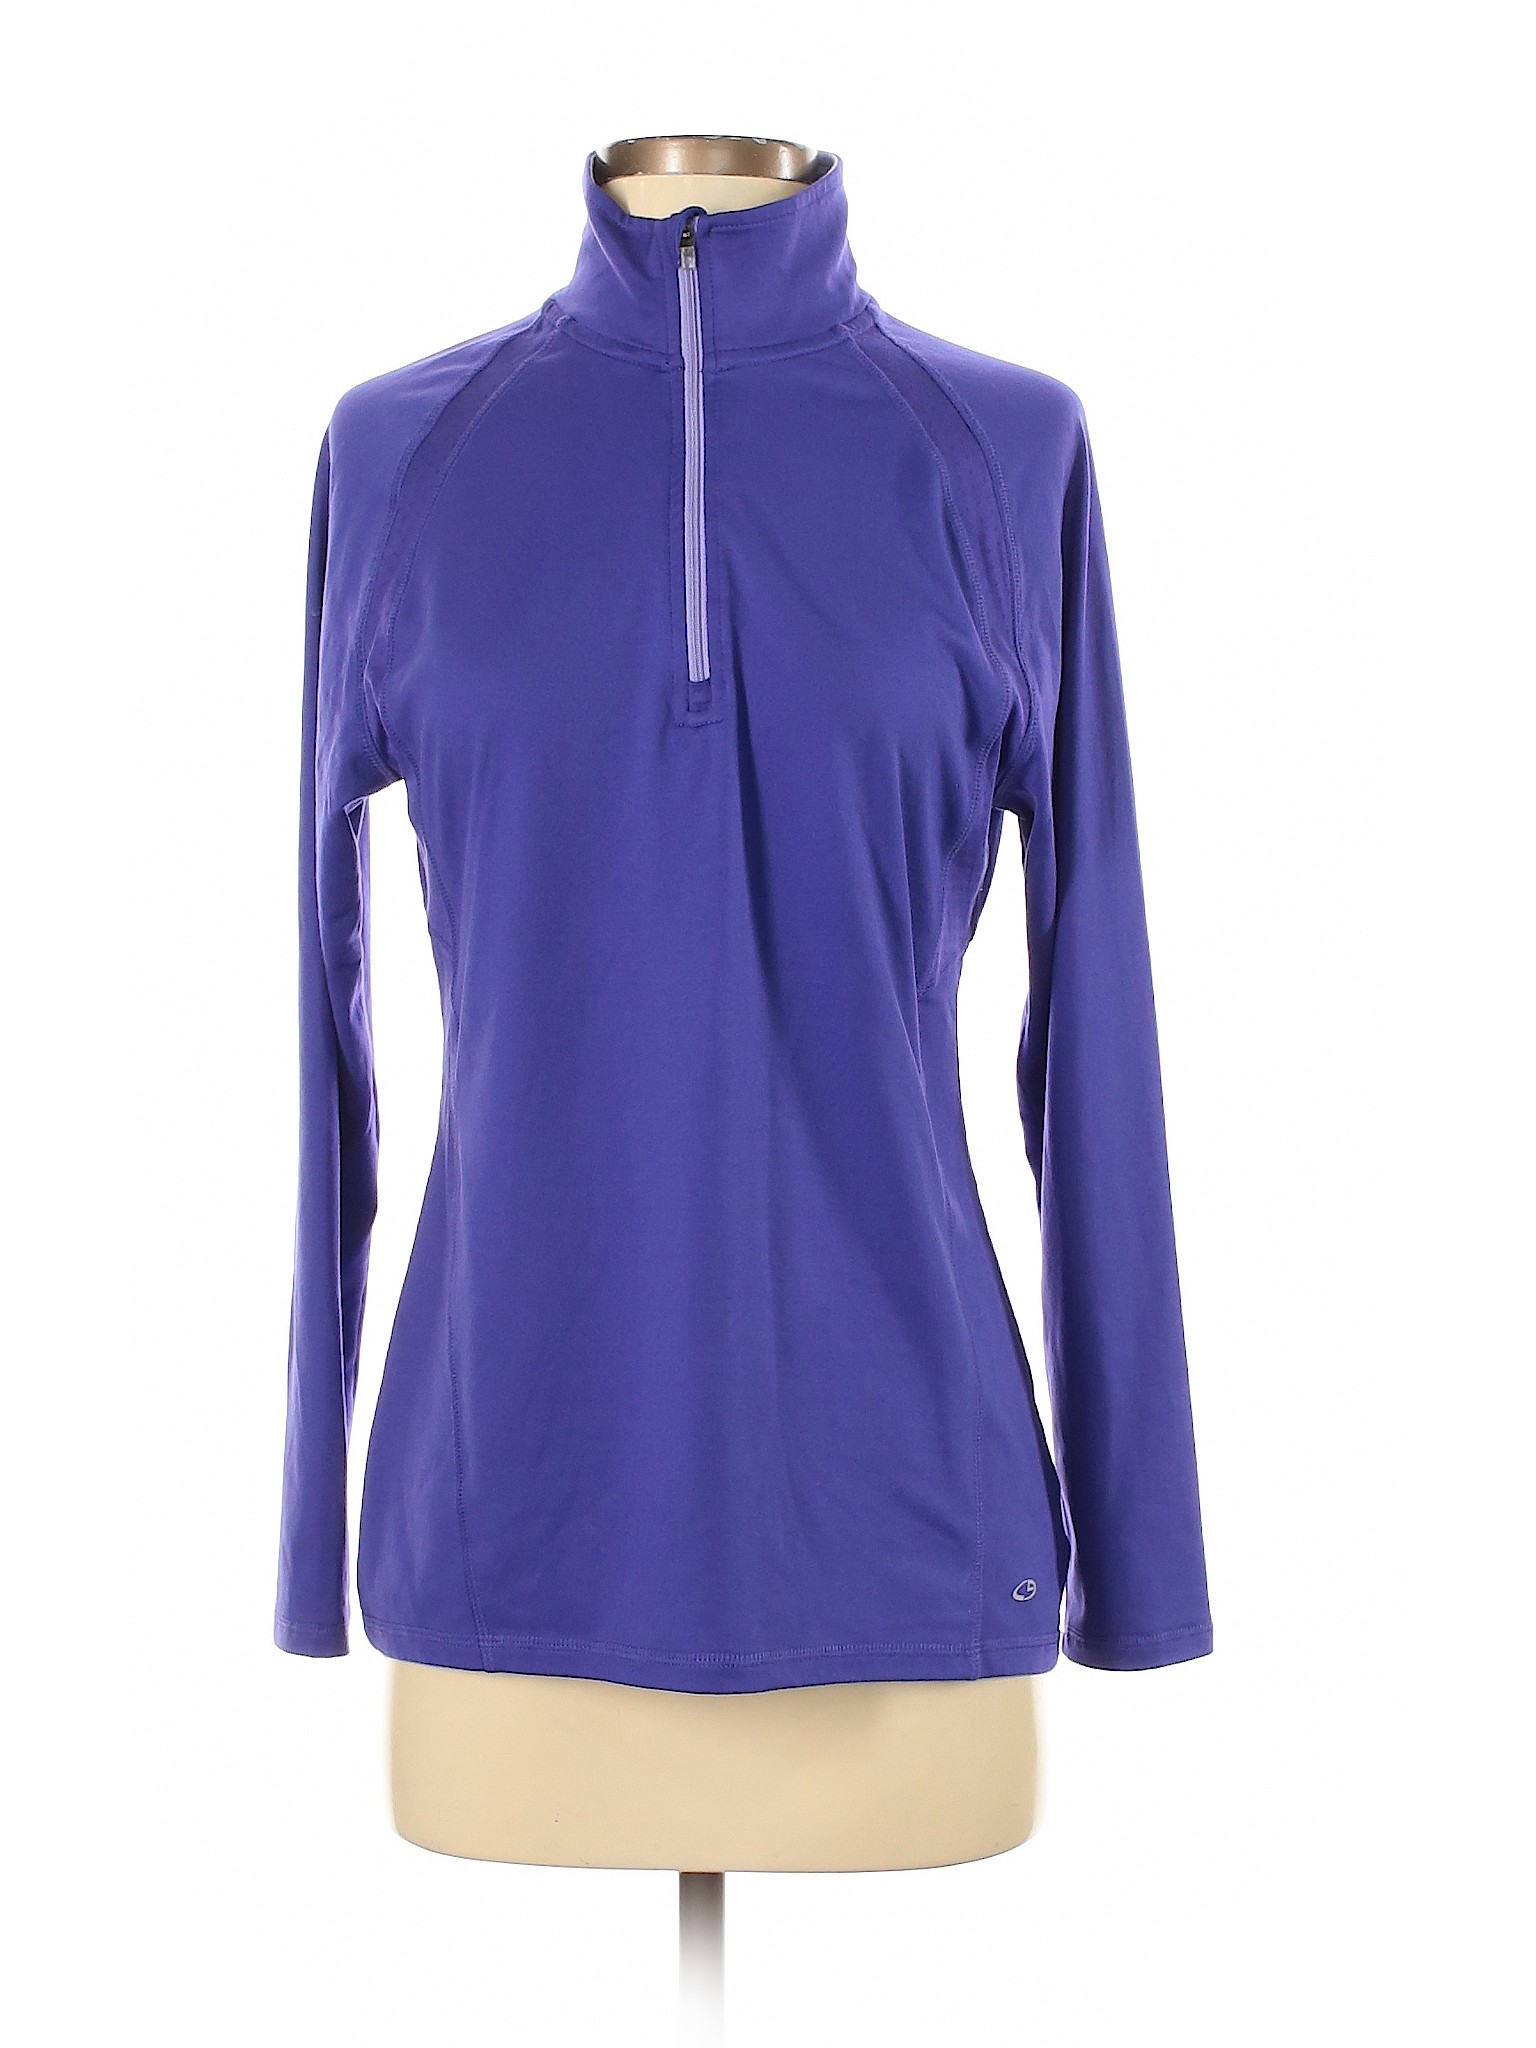 C9 By Champion Women Purple Track Jacket S | eBay